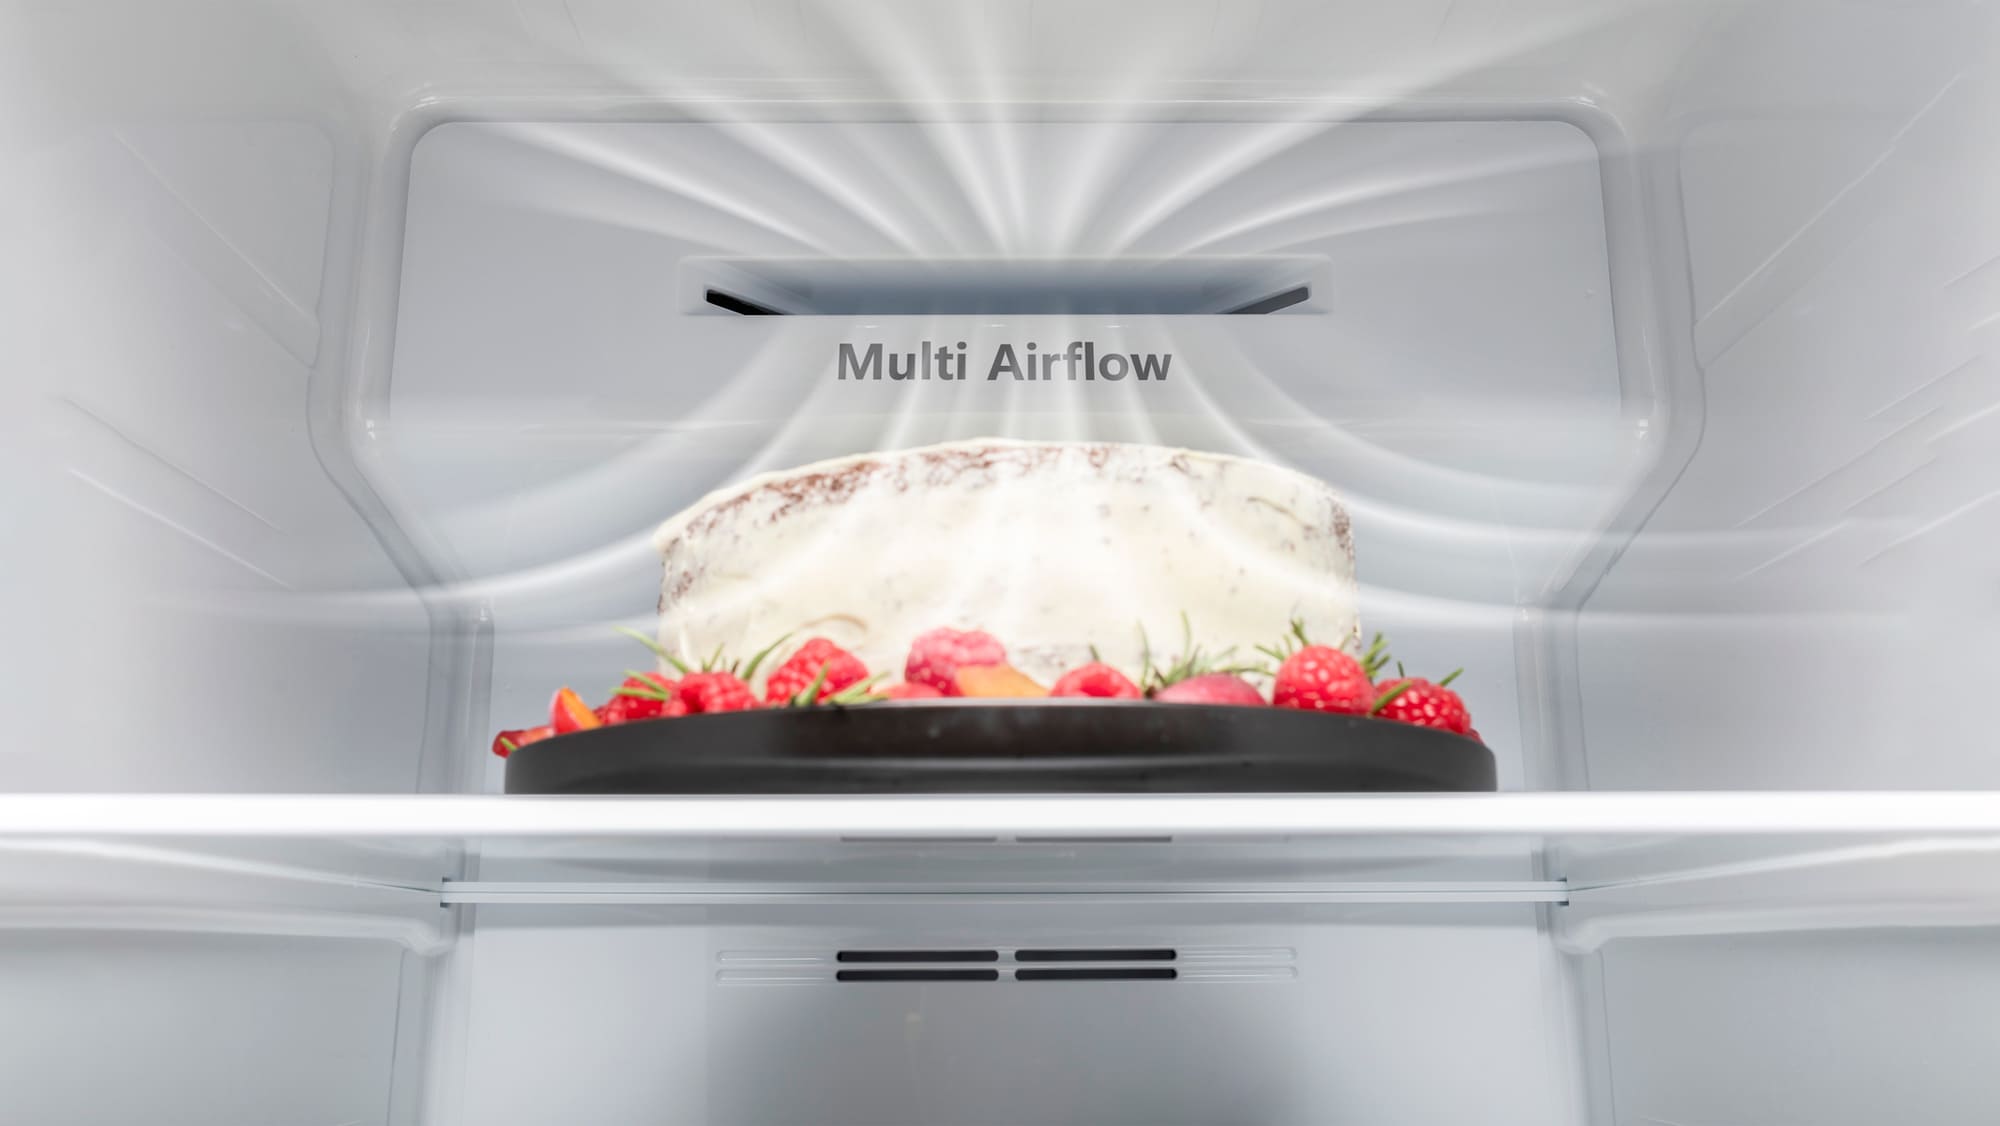 Multi Air Flow